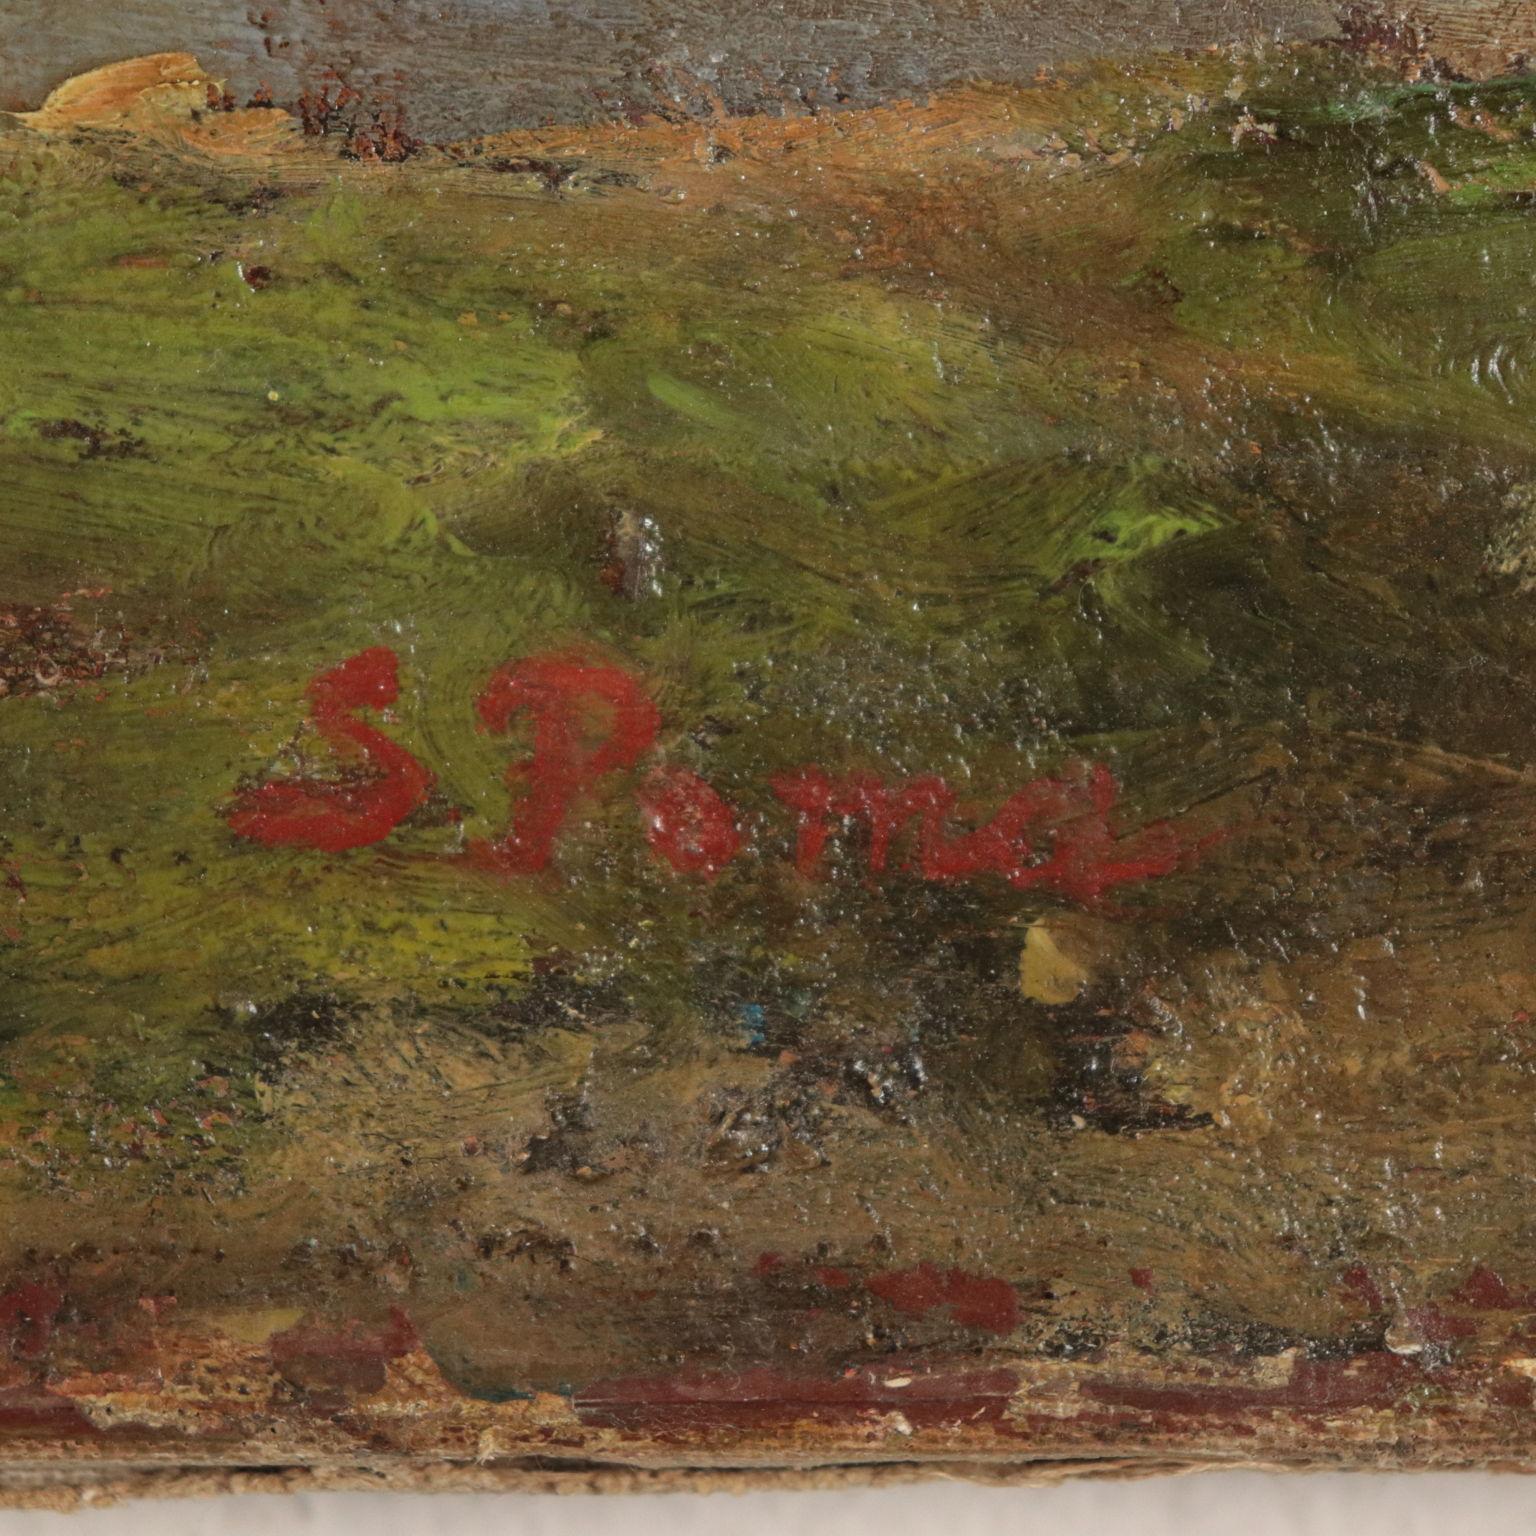 Landscape attributable to Silvio Poma, Oil on Canvas, 19th Century 1